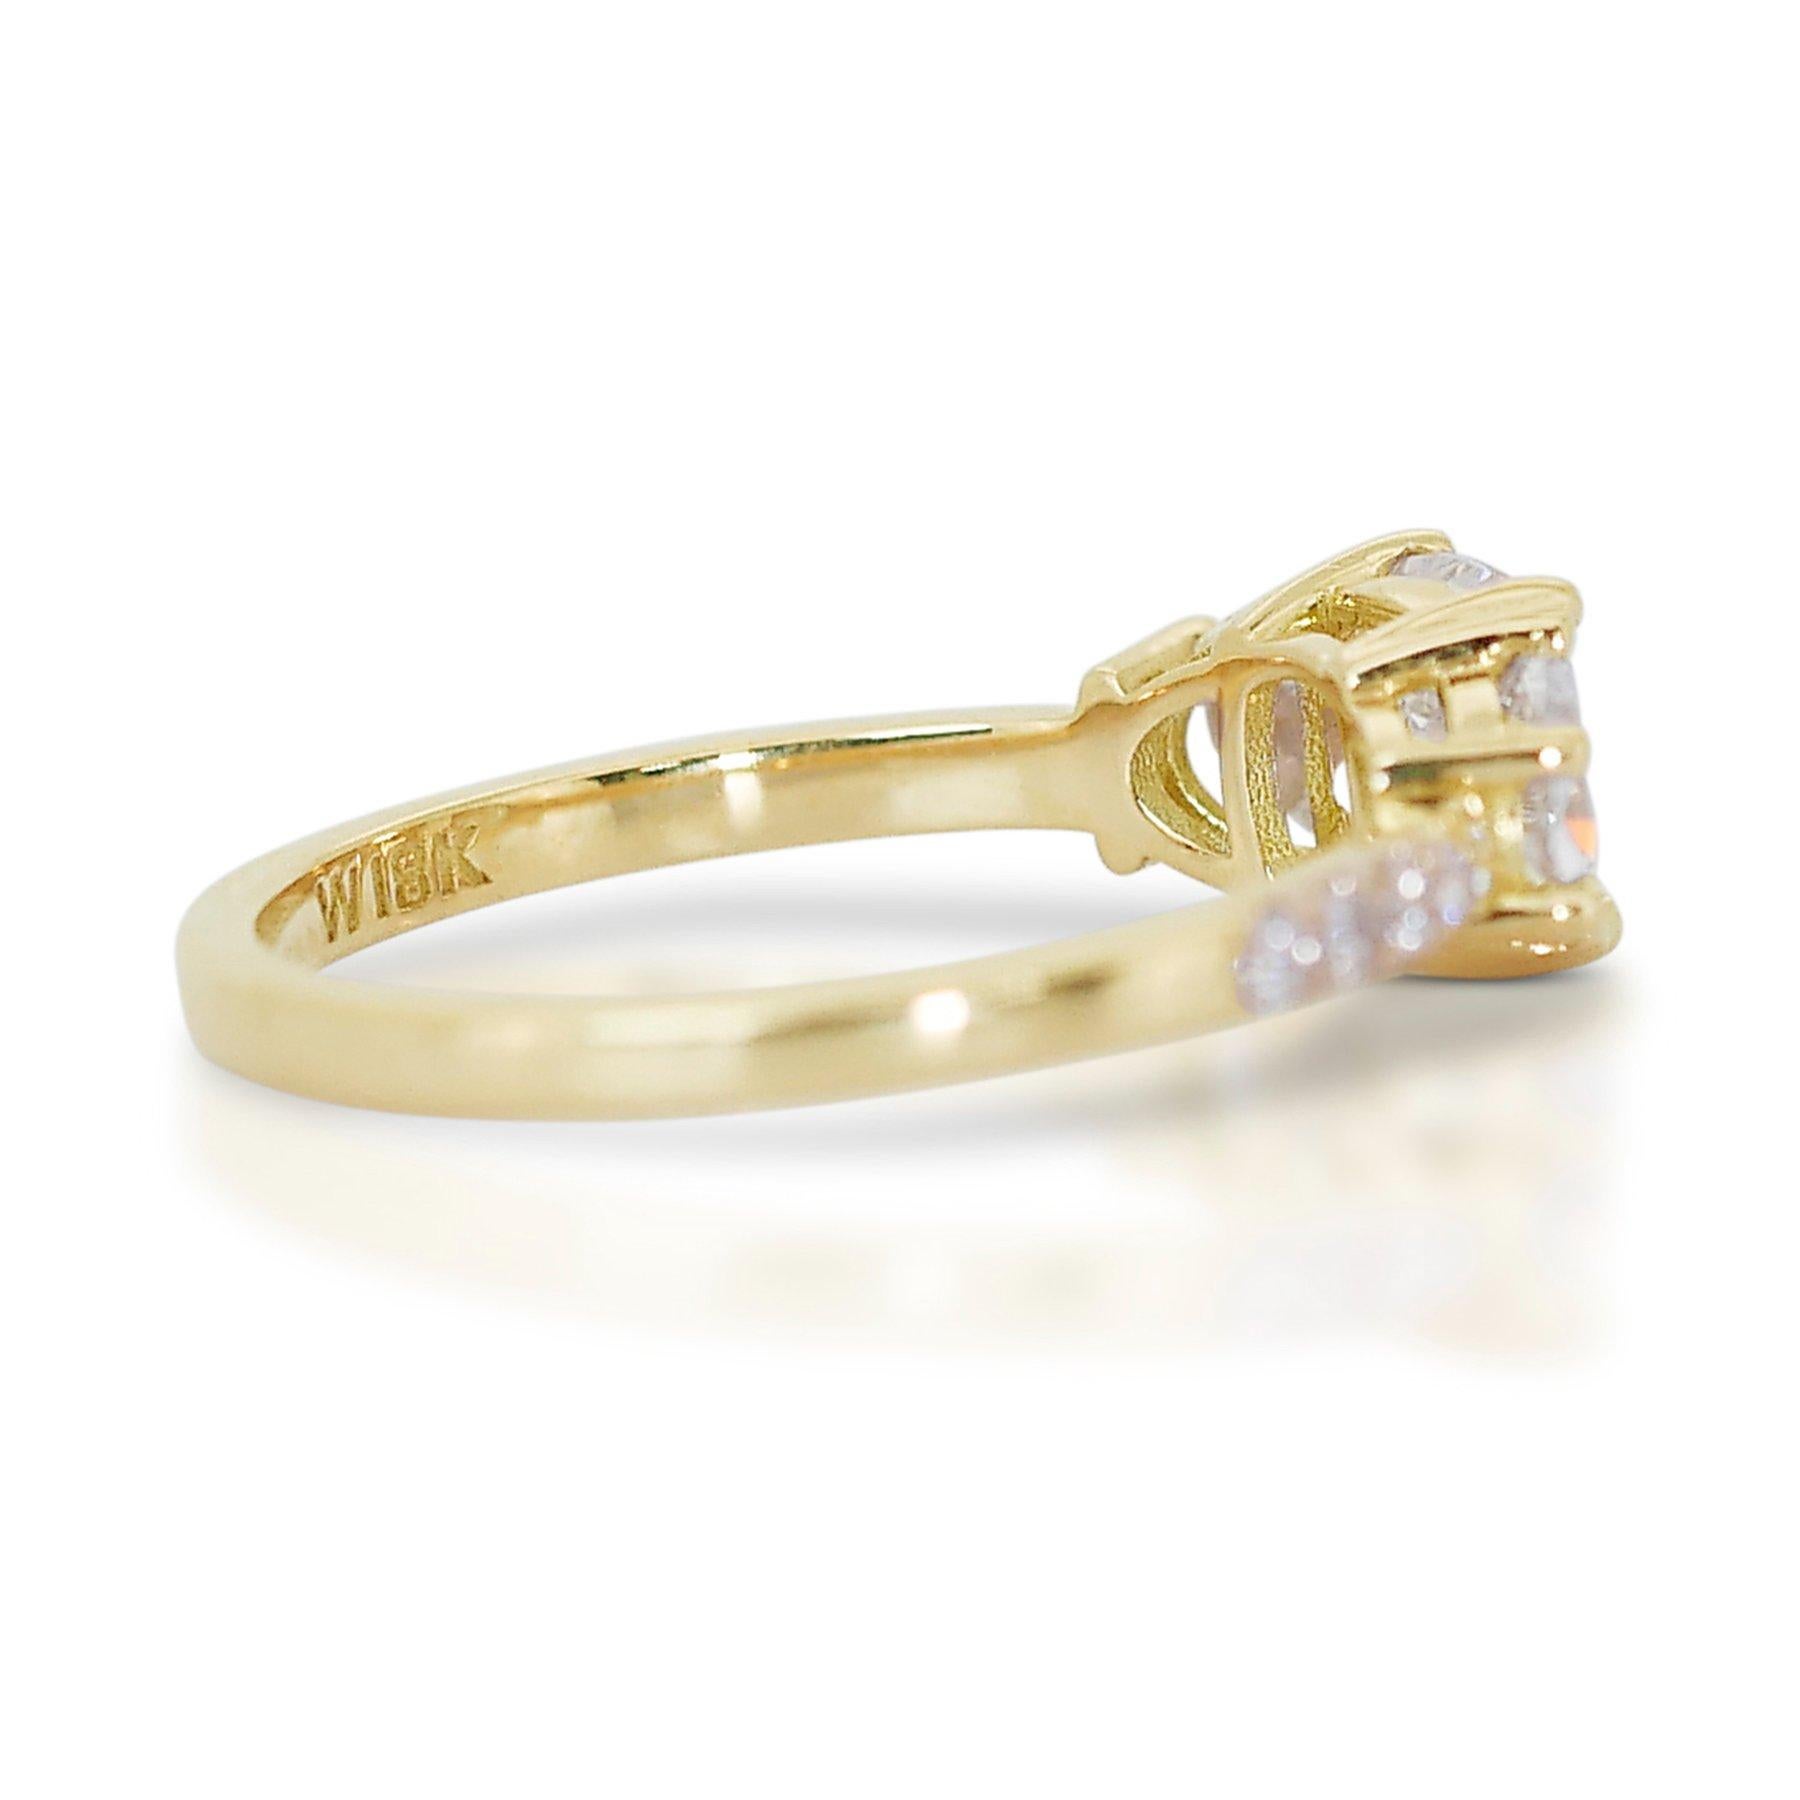 Shining 1.04 ct Cushion Cut Diamond 3 Stone Ring in 18k Yellow Gold – GIA  For Sale 3